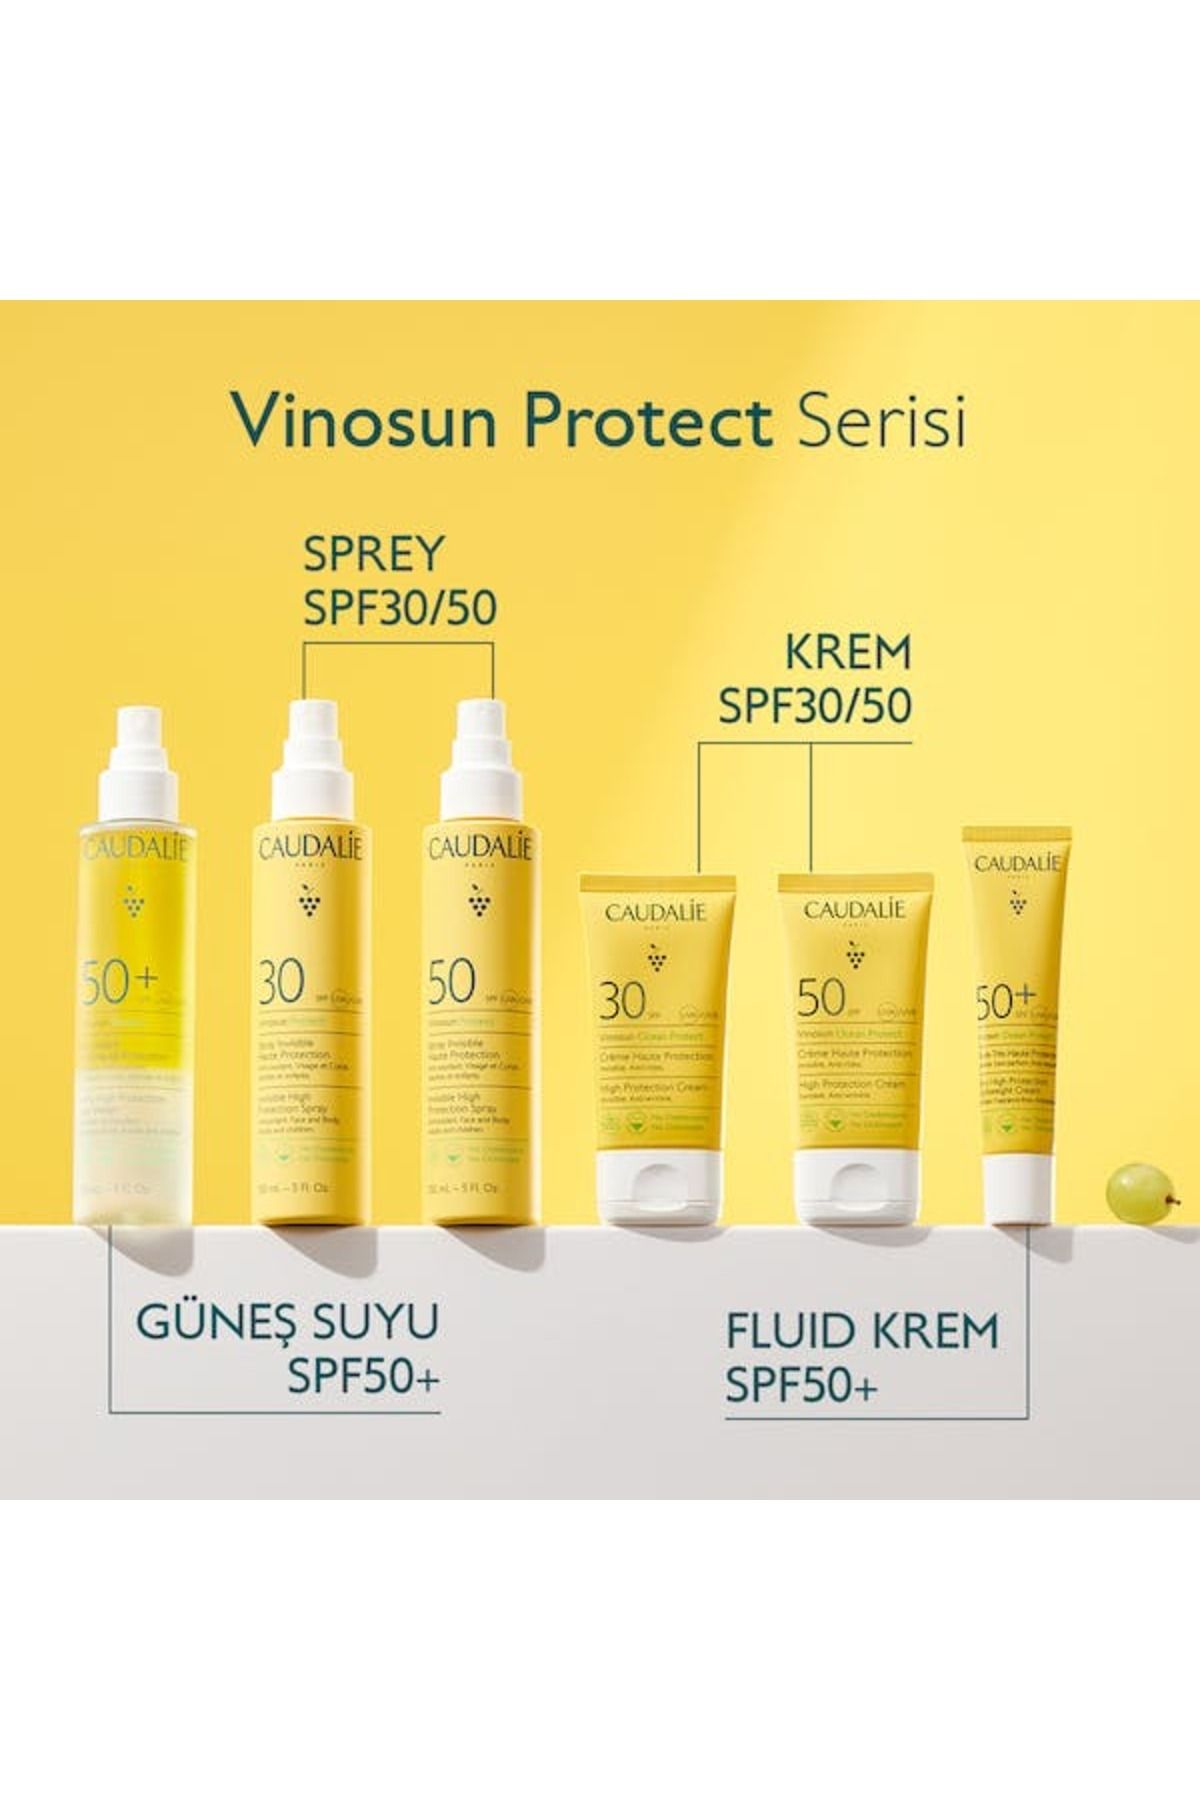 Caudalie کرم ضد آفتاب Vinosun Protect Spf 30 ضد آب 50 میل